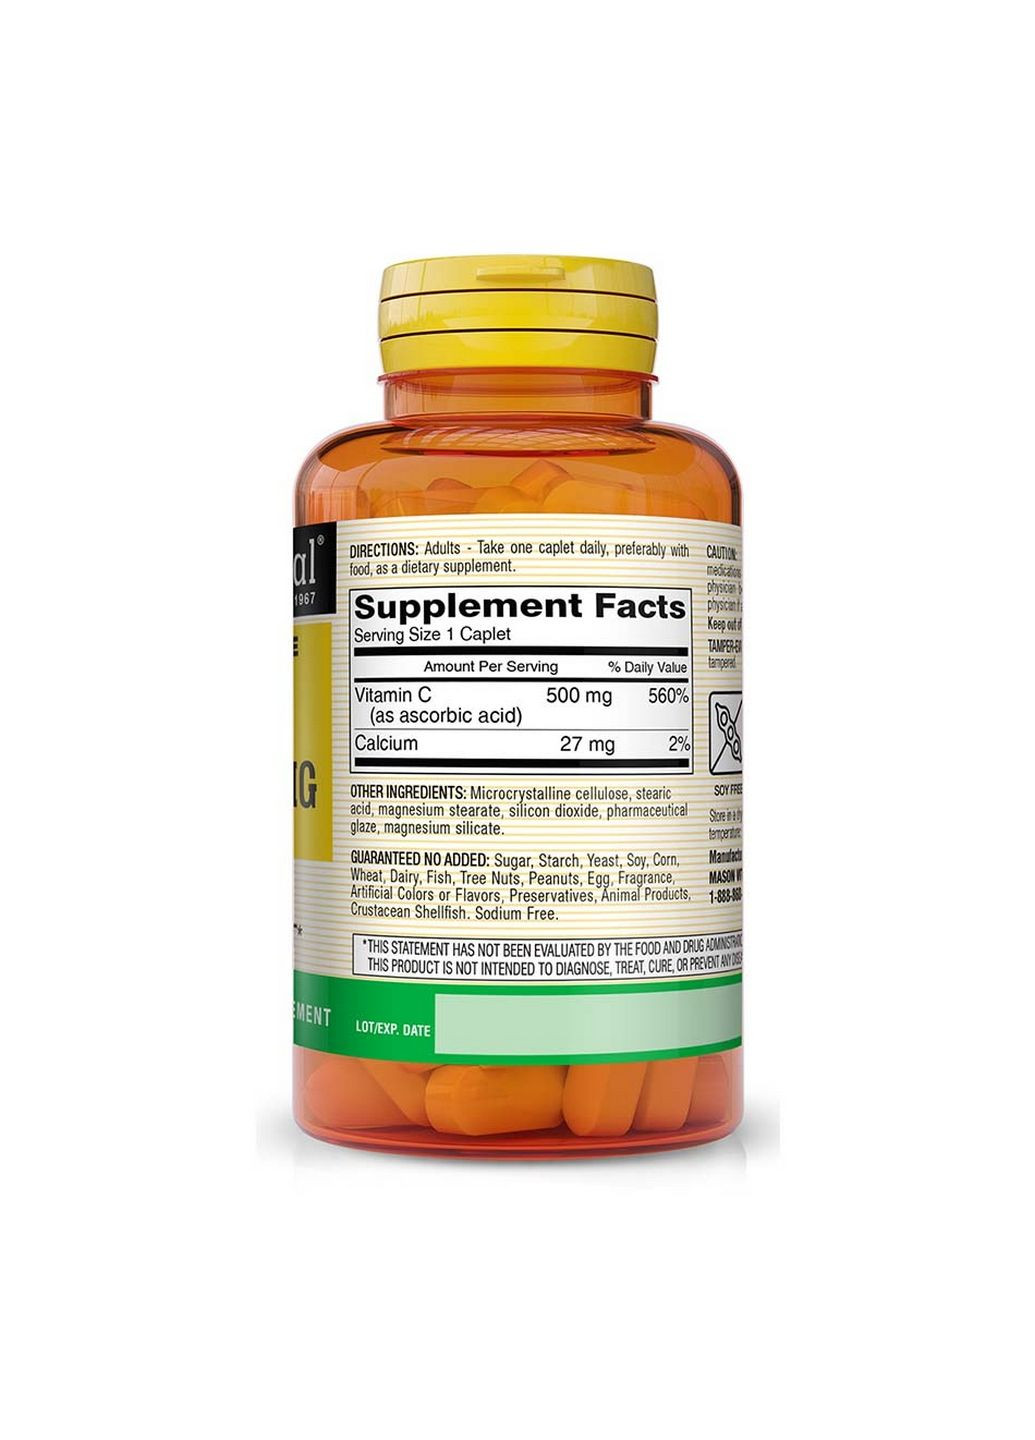 Вітаміни та мінерали Vitamin C 500 mg Delayed Release, 100 каплет Mason Natural (293338392)